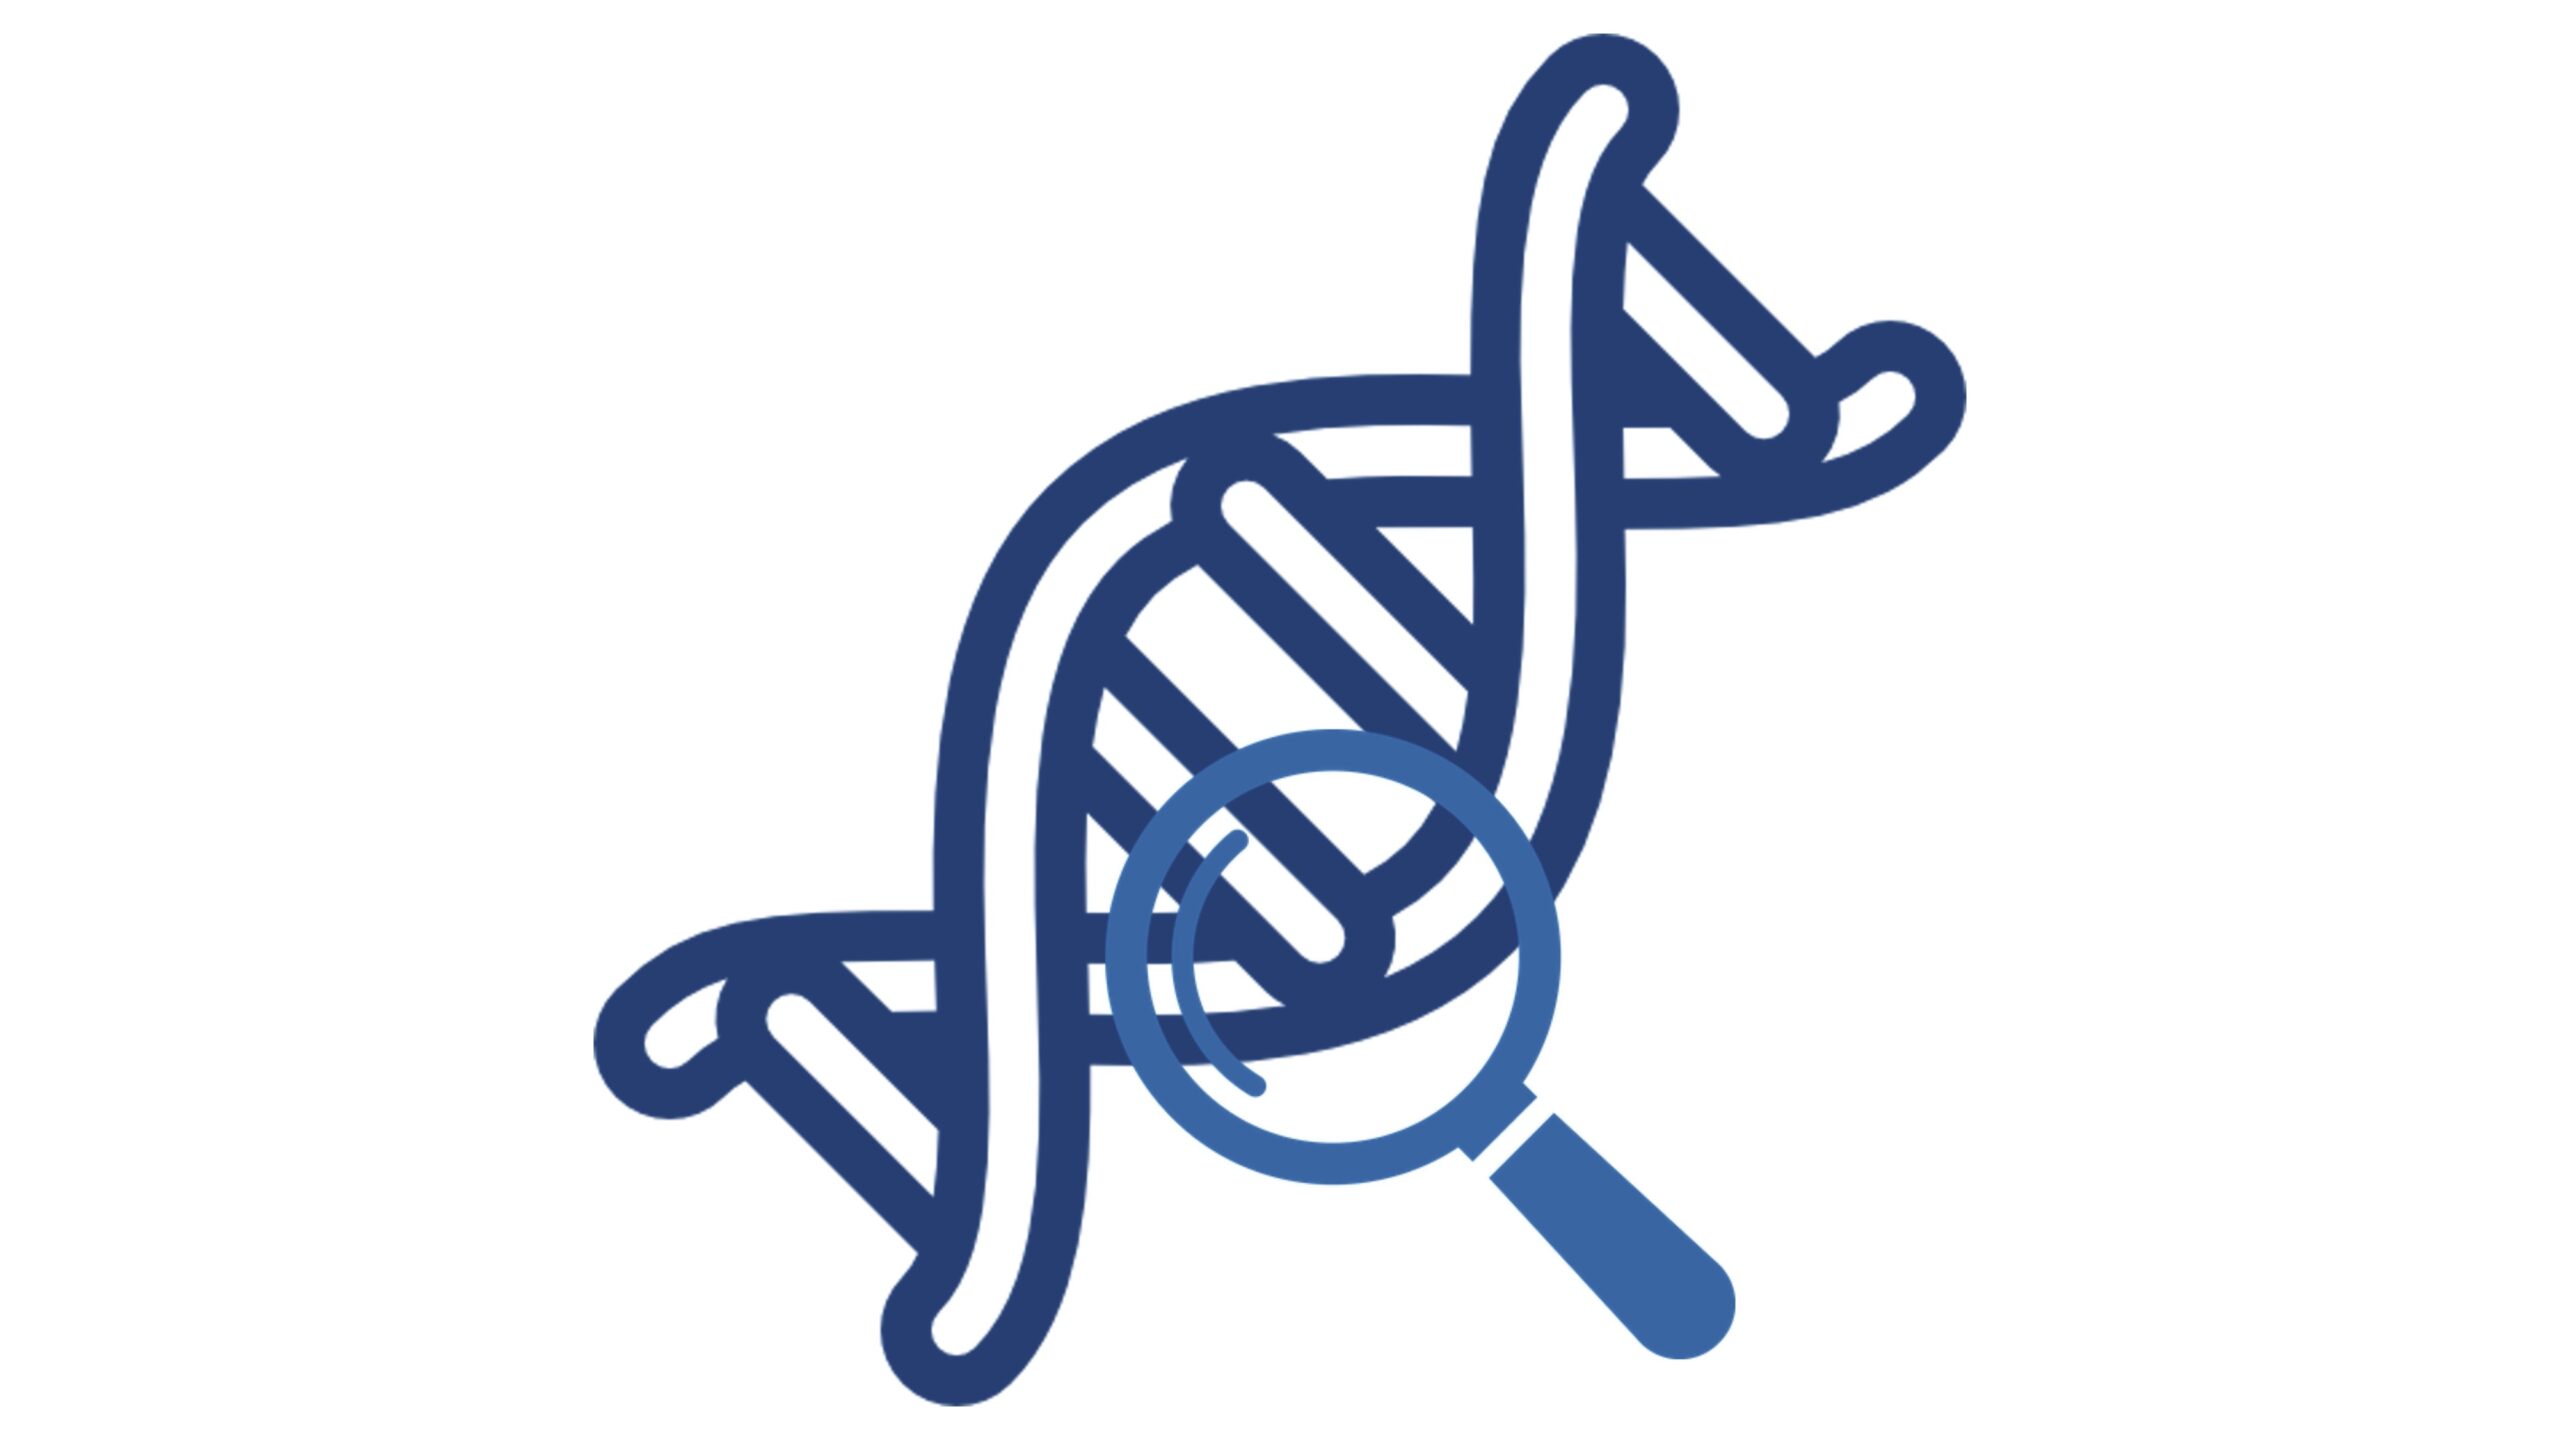 NEBNext Ultra II FS DNA Library Prep Kit for Illumina